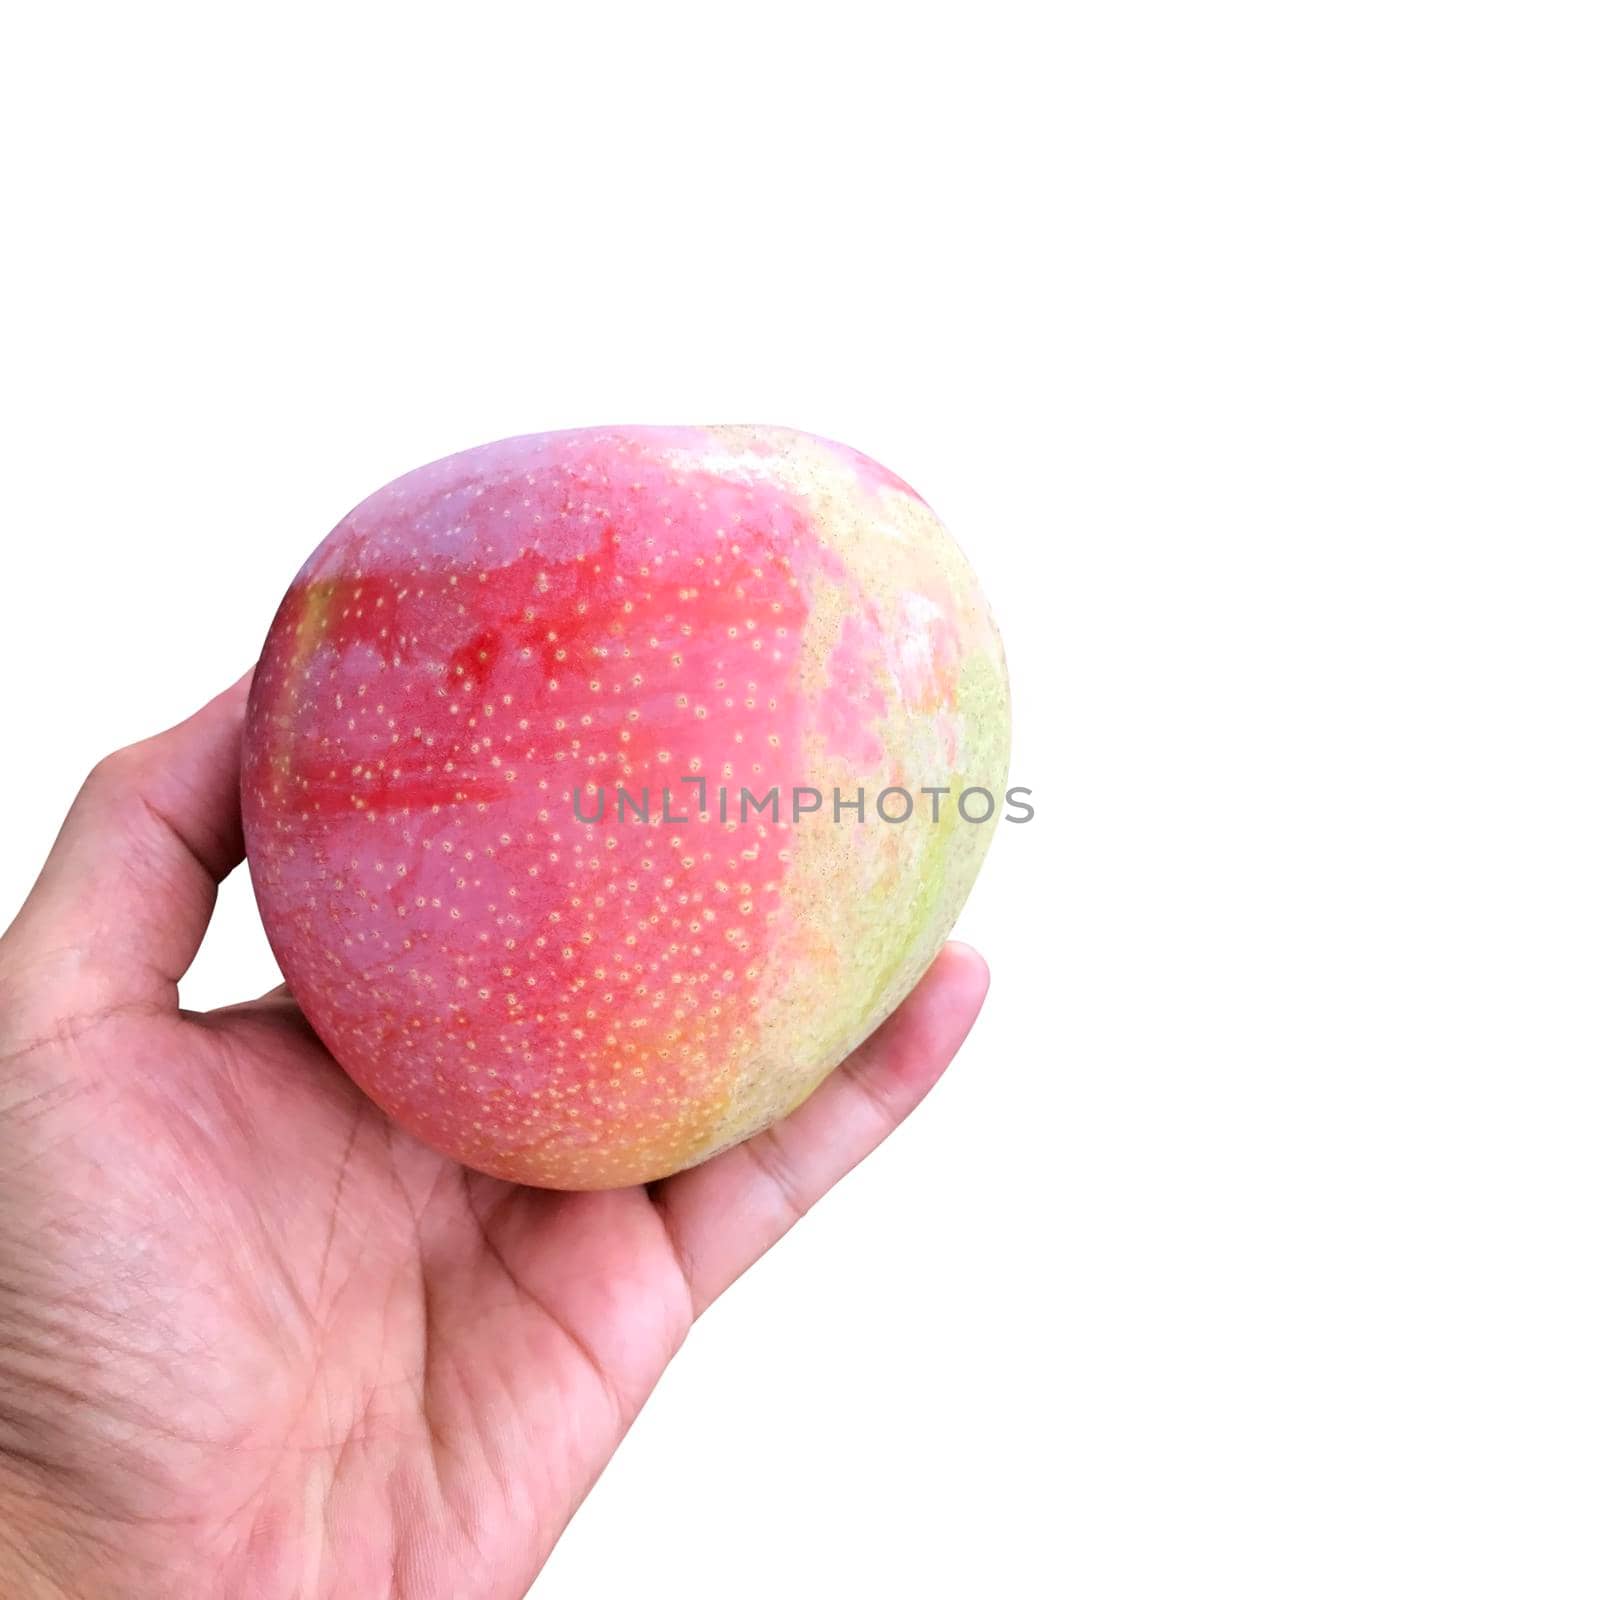 Close up ripe mango in hand isolated on white background.